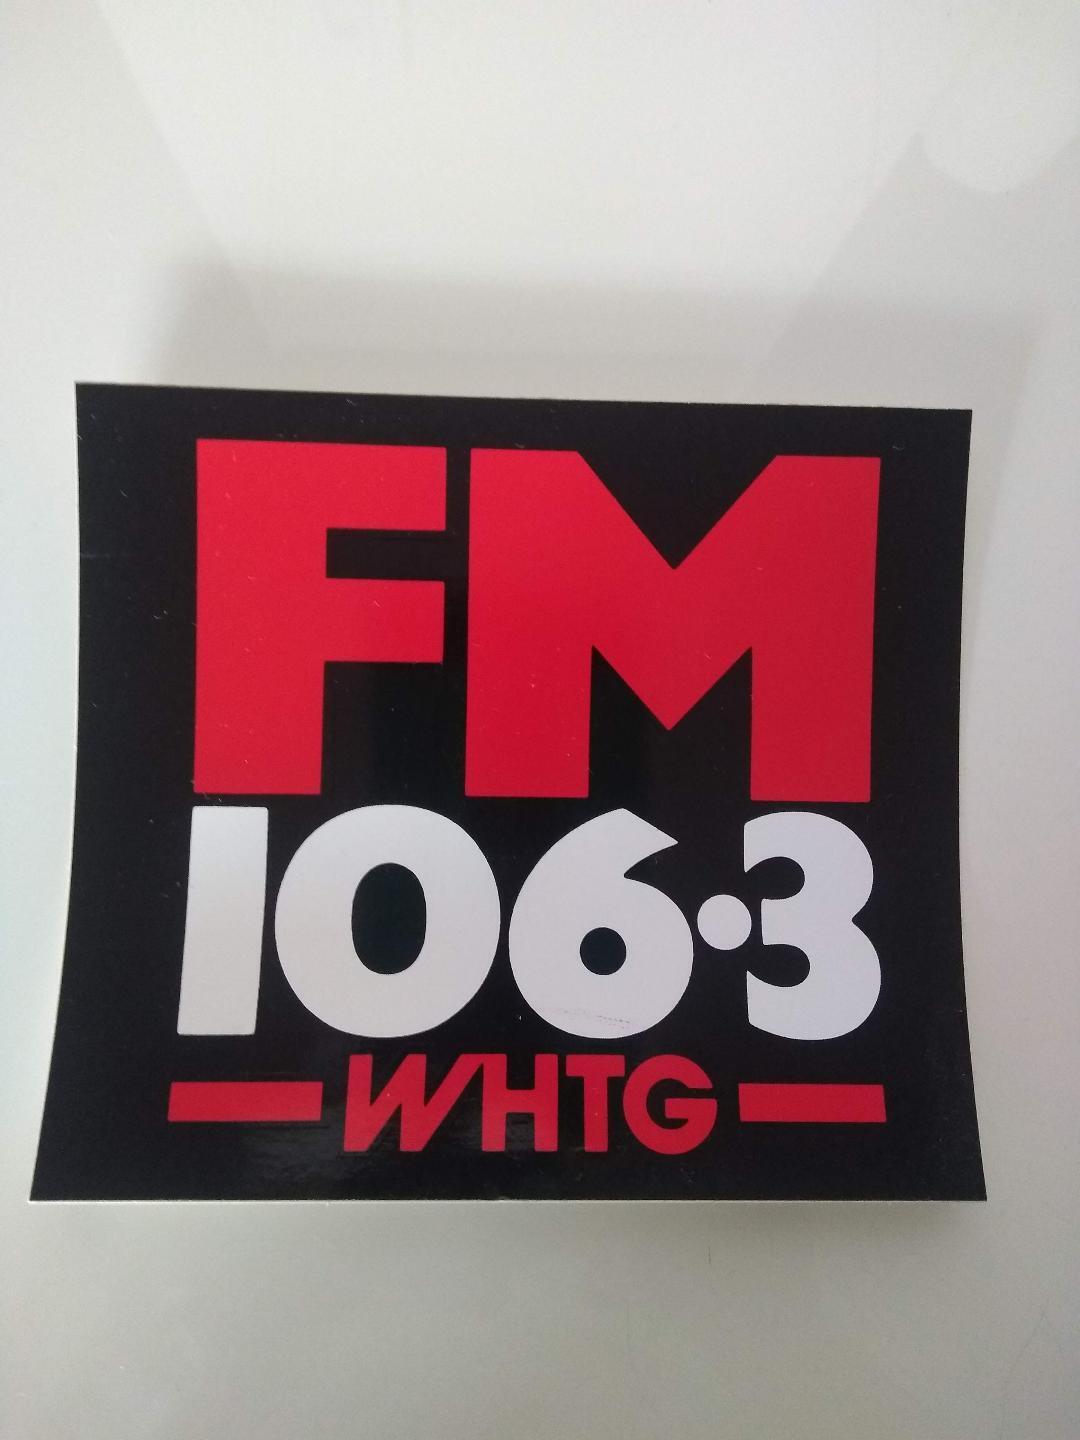 WHTG AM/FM RADIO STATION BUMPER STICKER DECAL NEW JERSEY AUTHENTIC/ORIGINAL